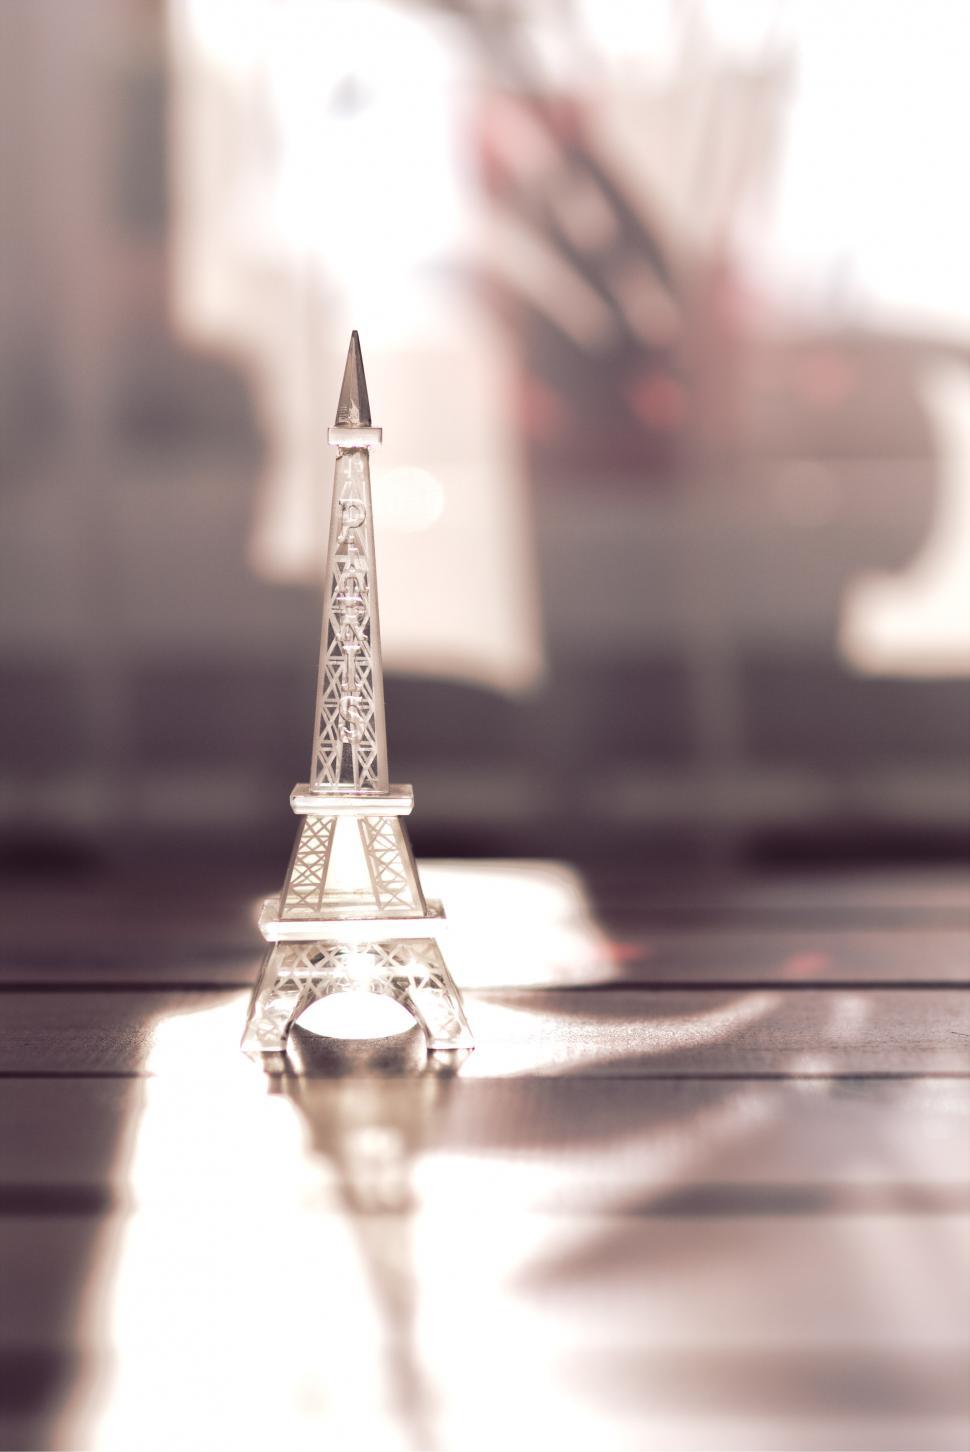 Free Image of Miniature Eiffel Tower Model on Table 